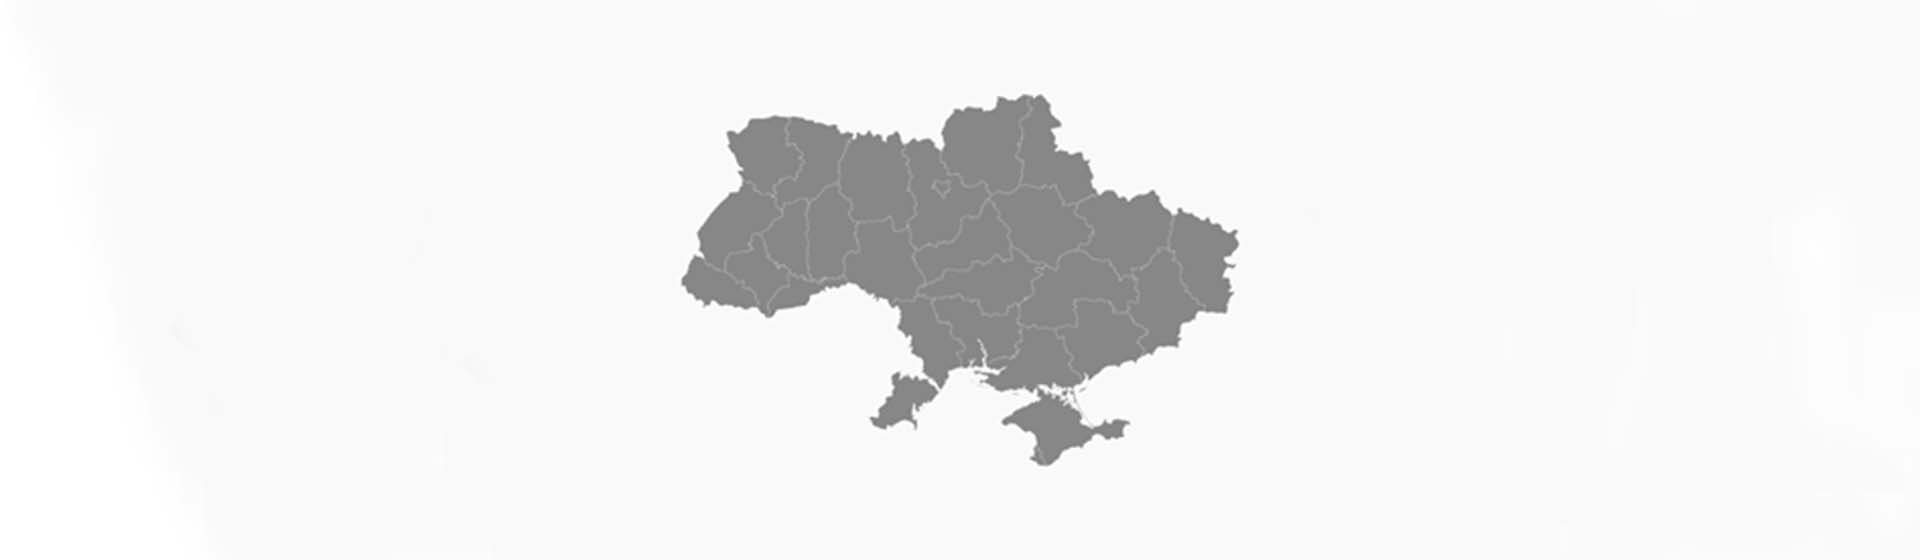 map of ukraine.jpg